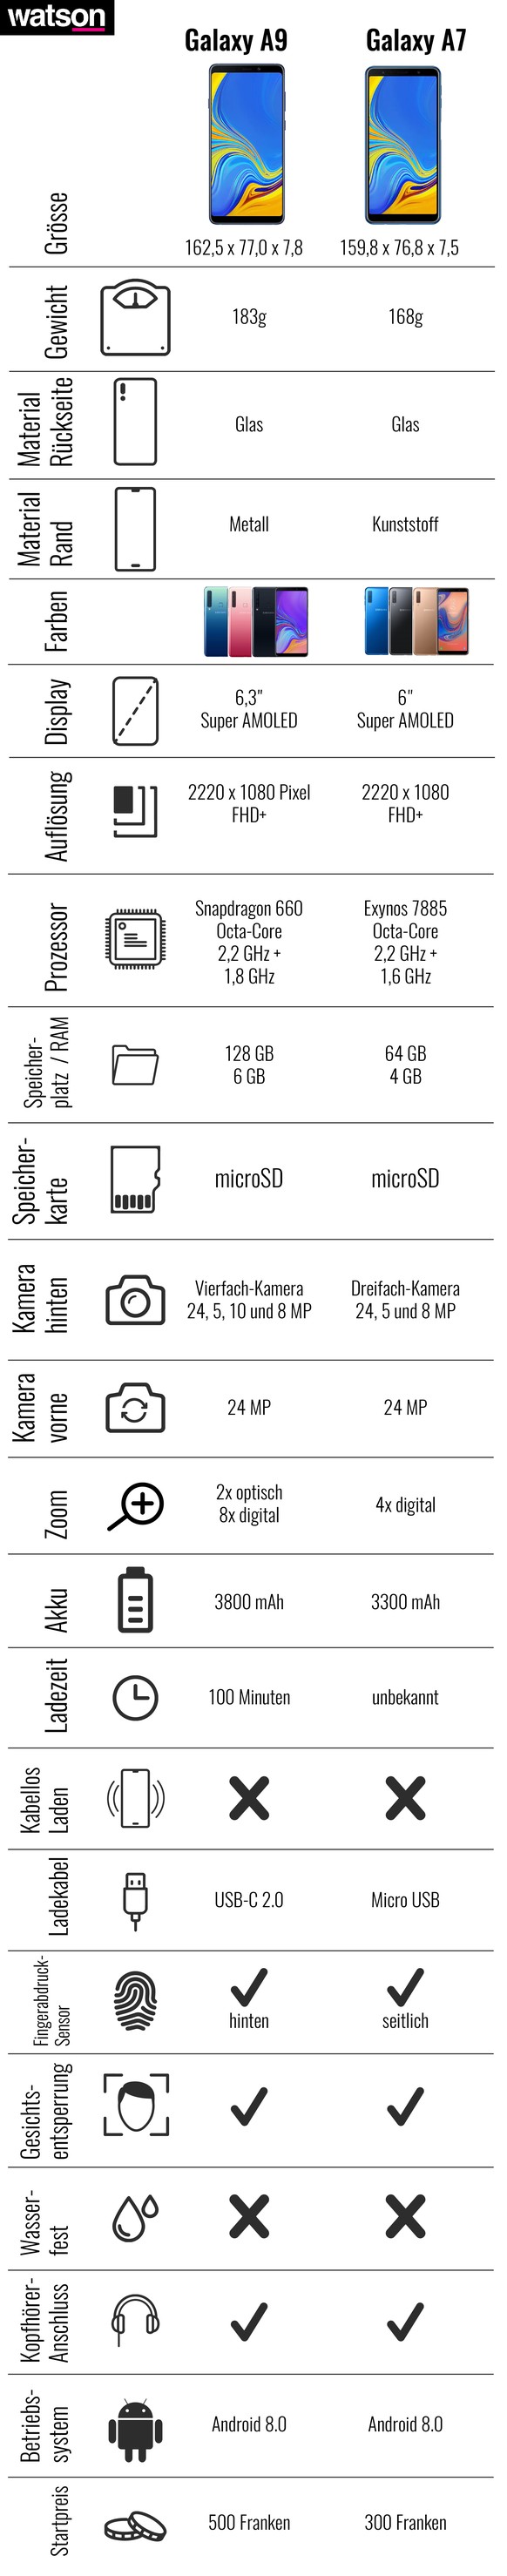 Samsung Galaxy A7 und A9 Infografik